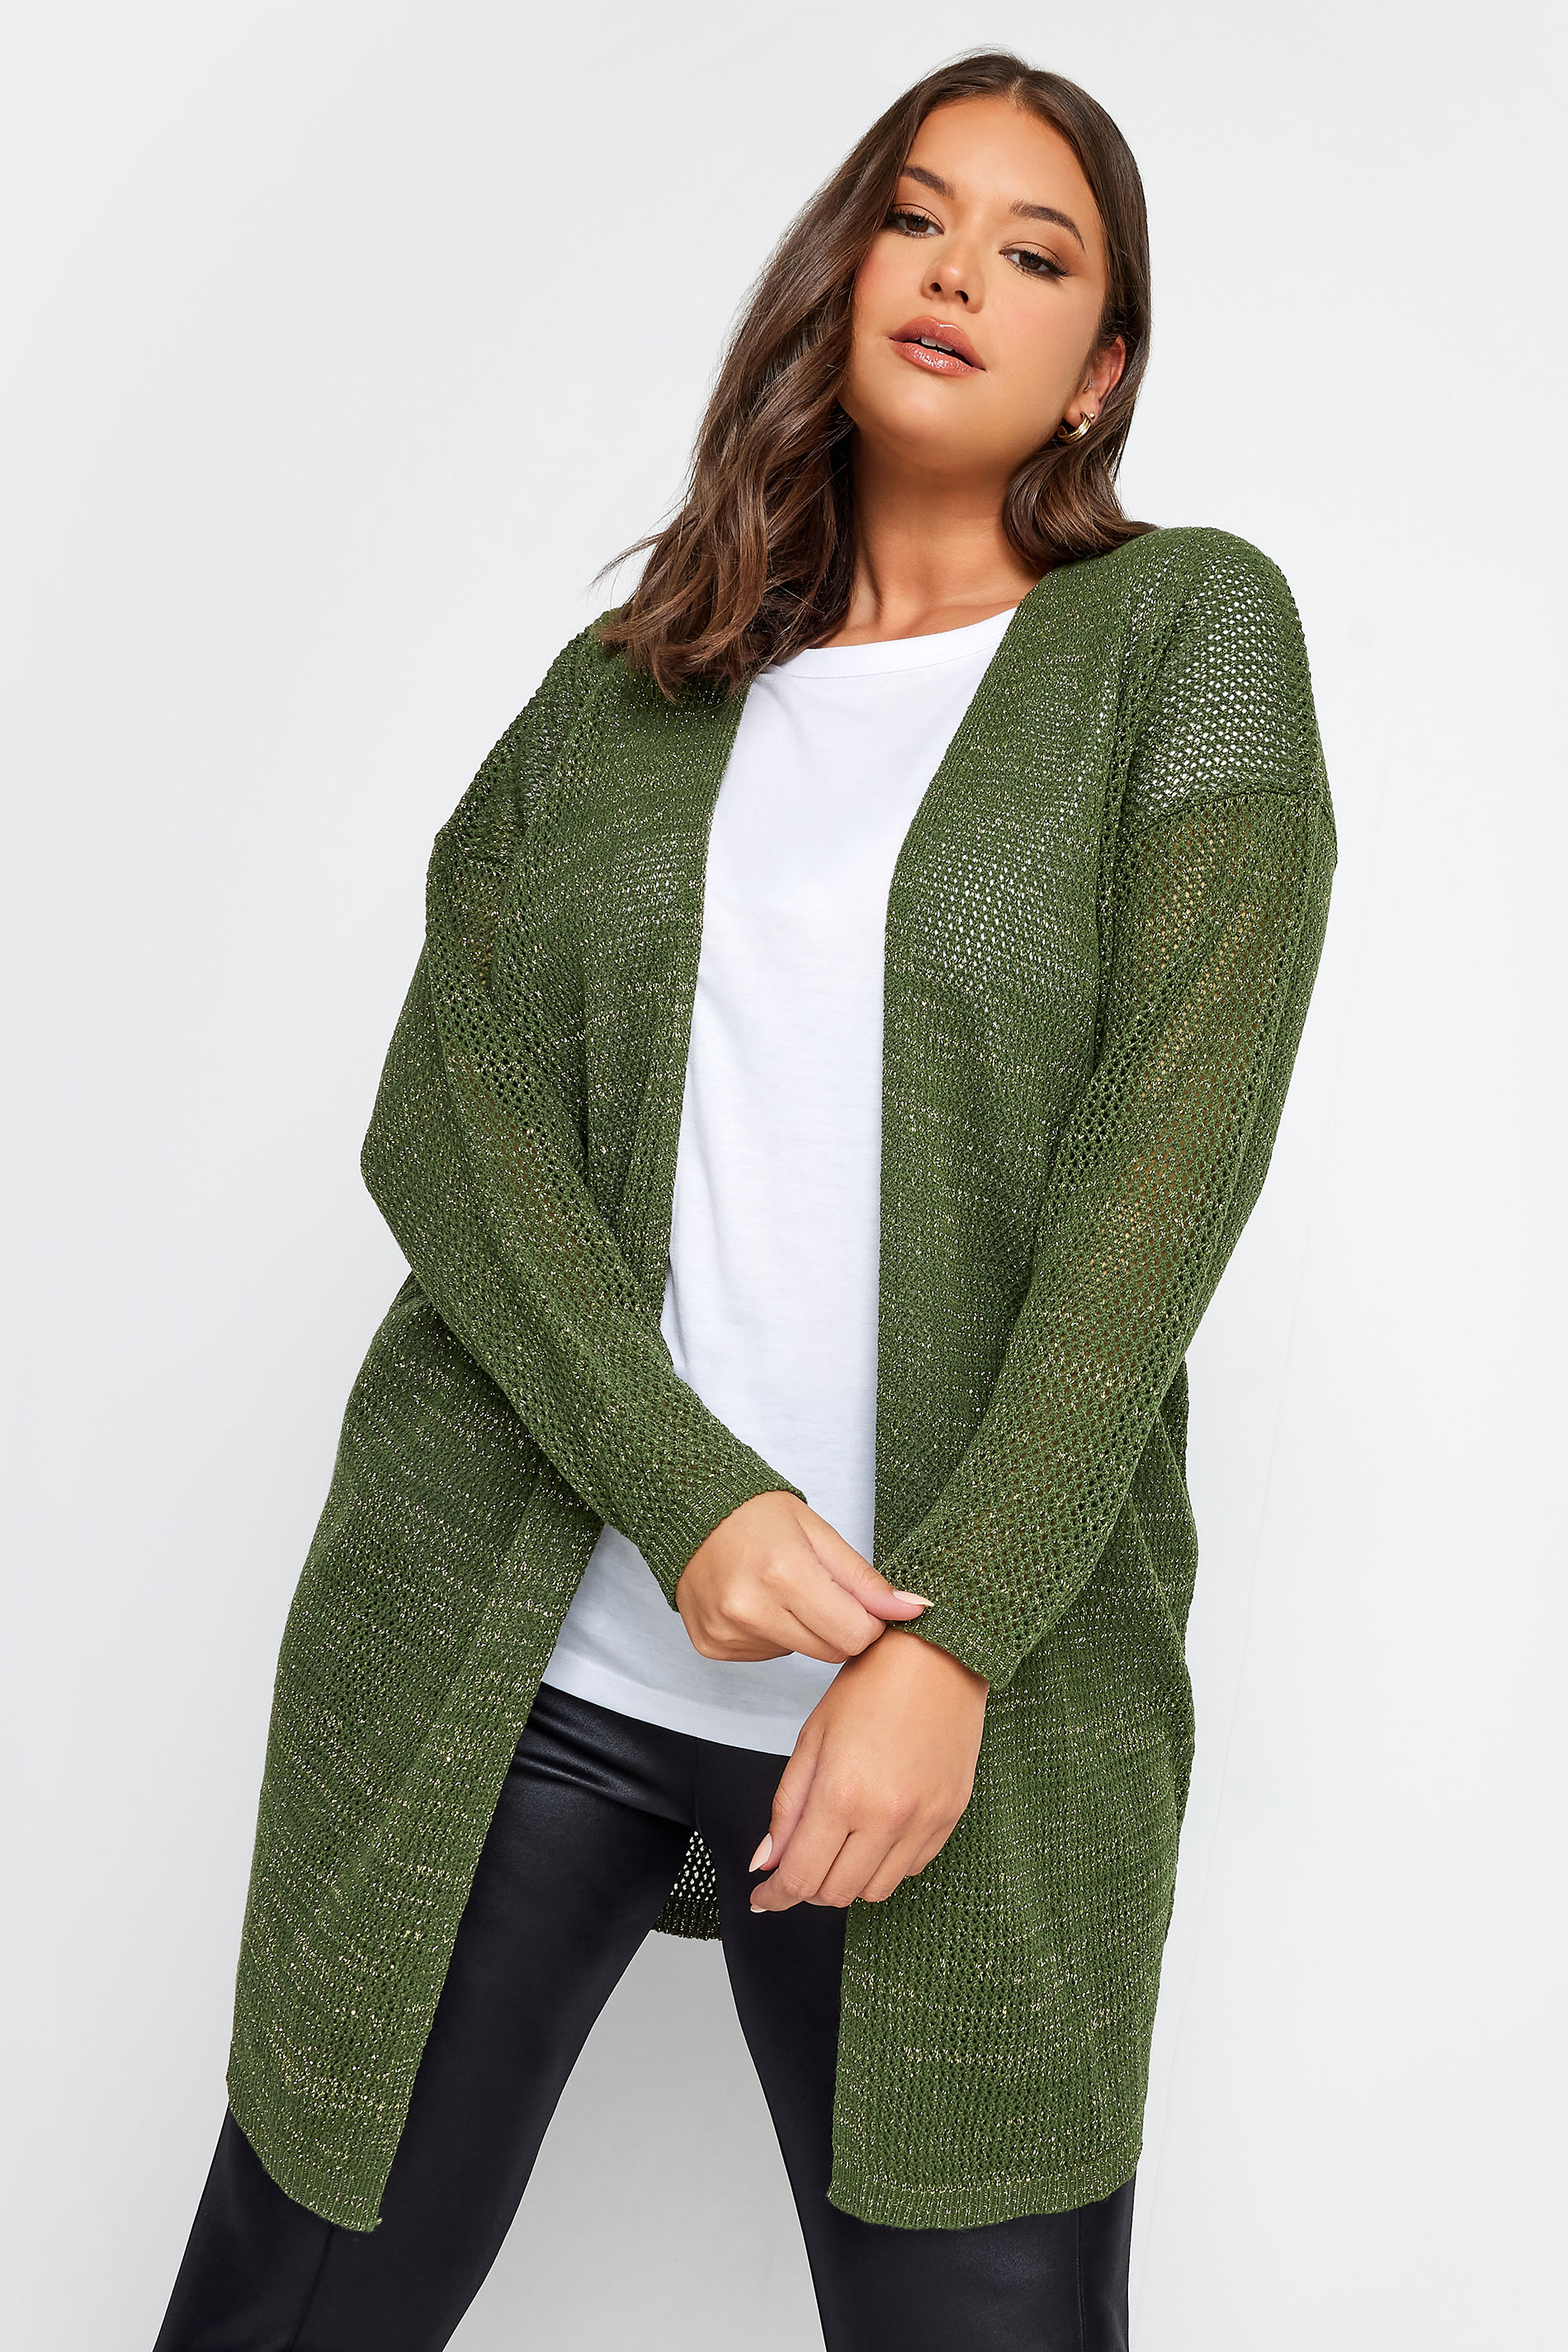 YOURS Curve Plus Size Khaki Green Metallic Knit Cardigan | Yours Clothing  1